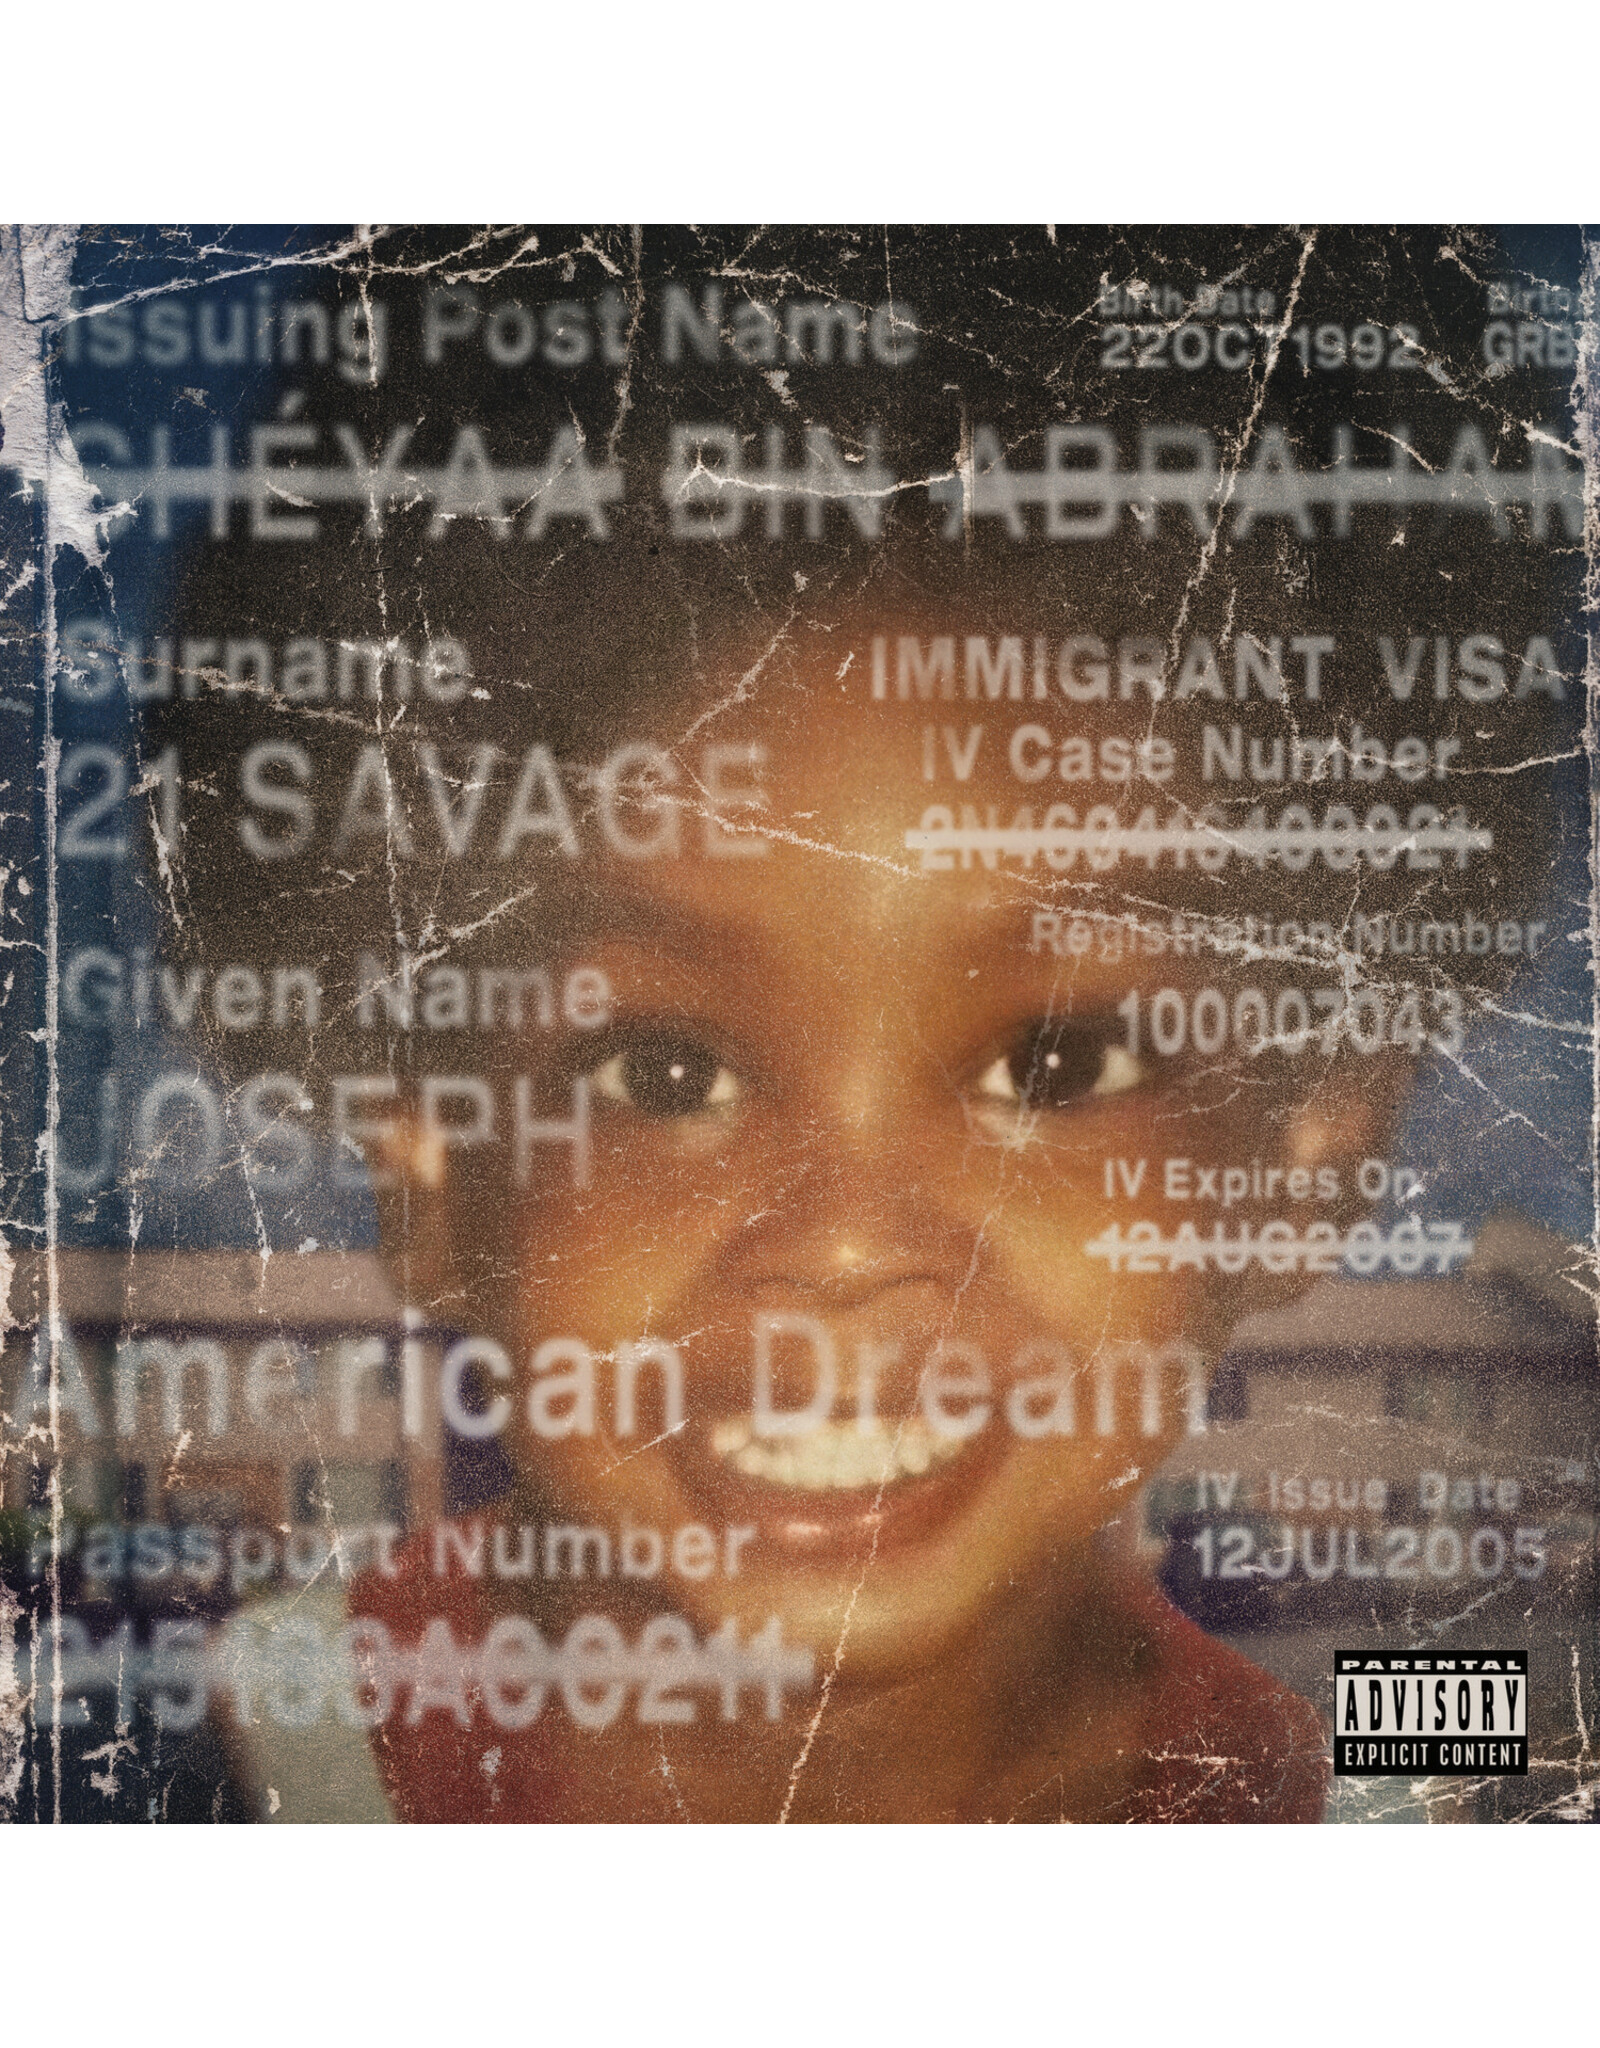 21 Savage - American Dream (Translucent Red Vinyl)